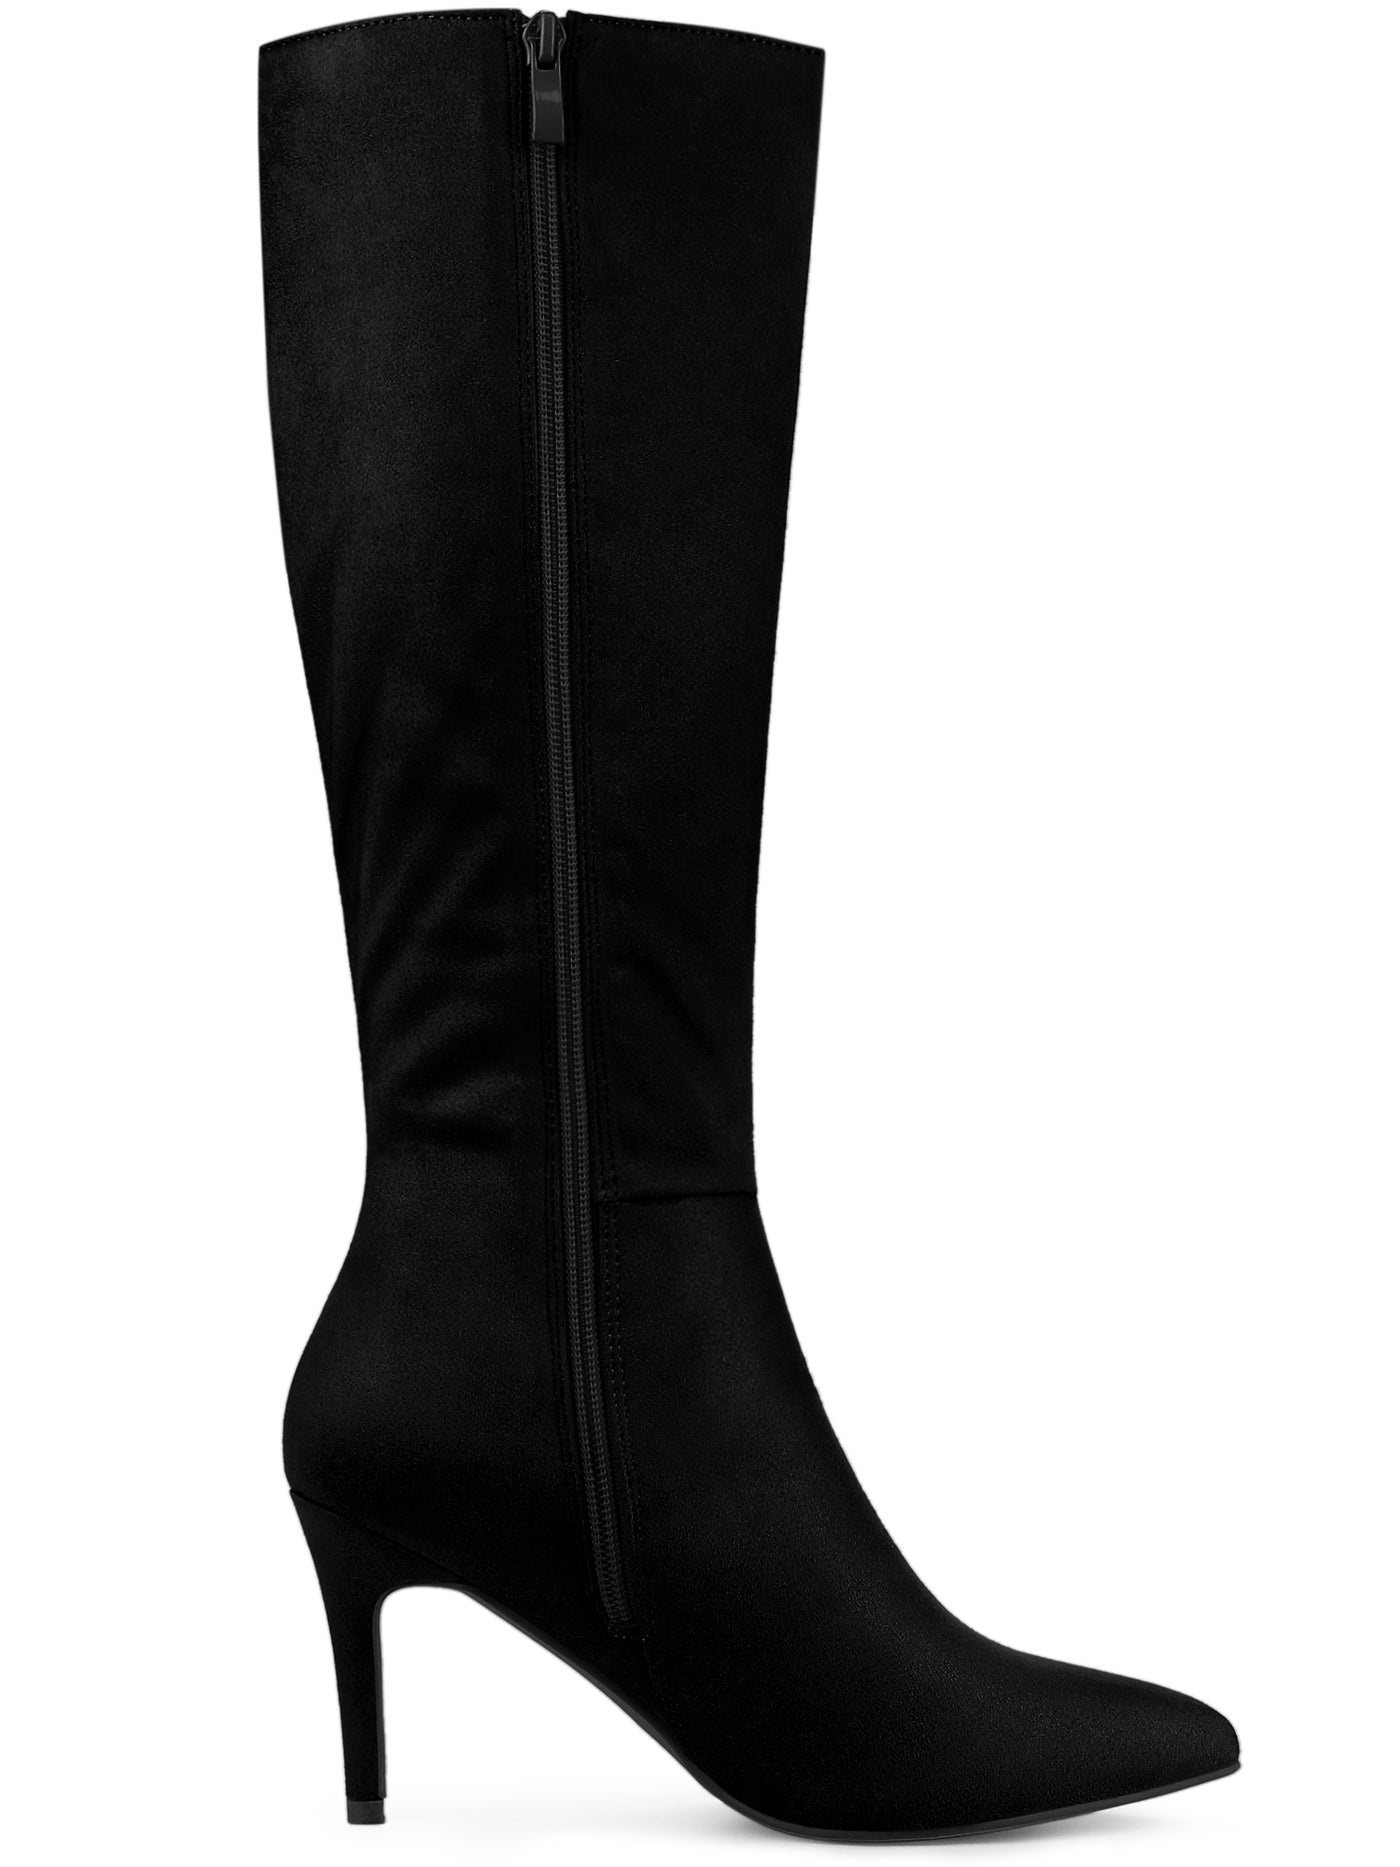 Allegra K Women's Pointed Toe Stiletto Heels Knee High Boots